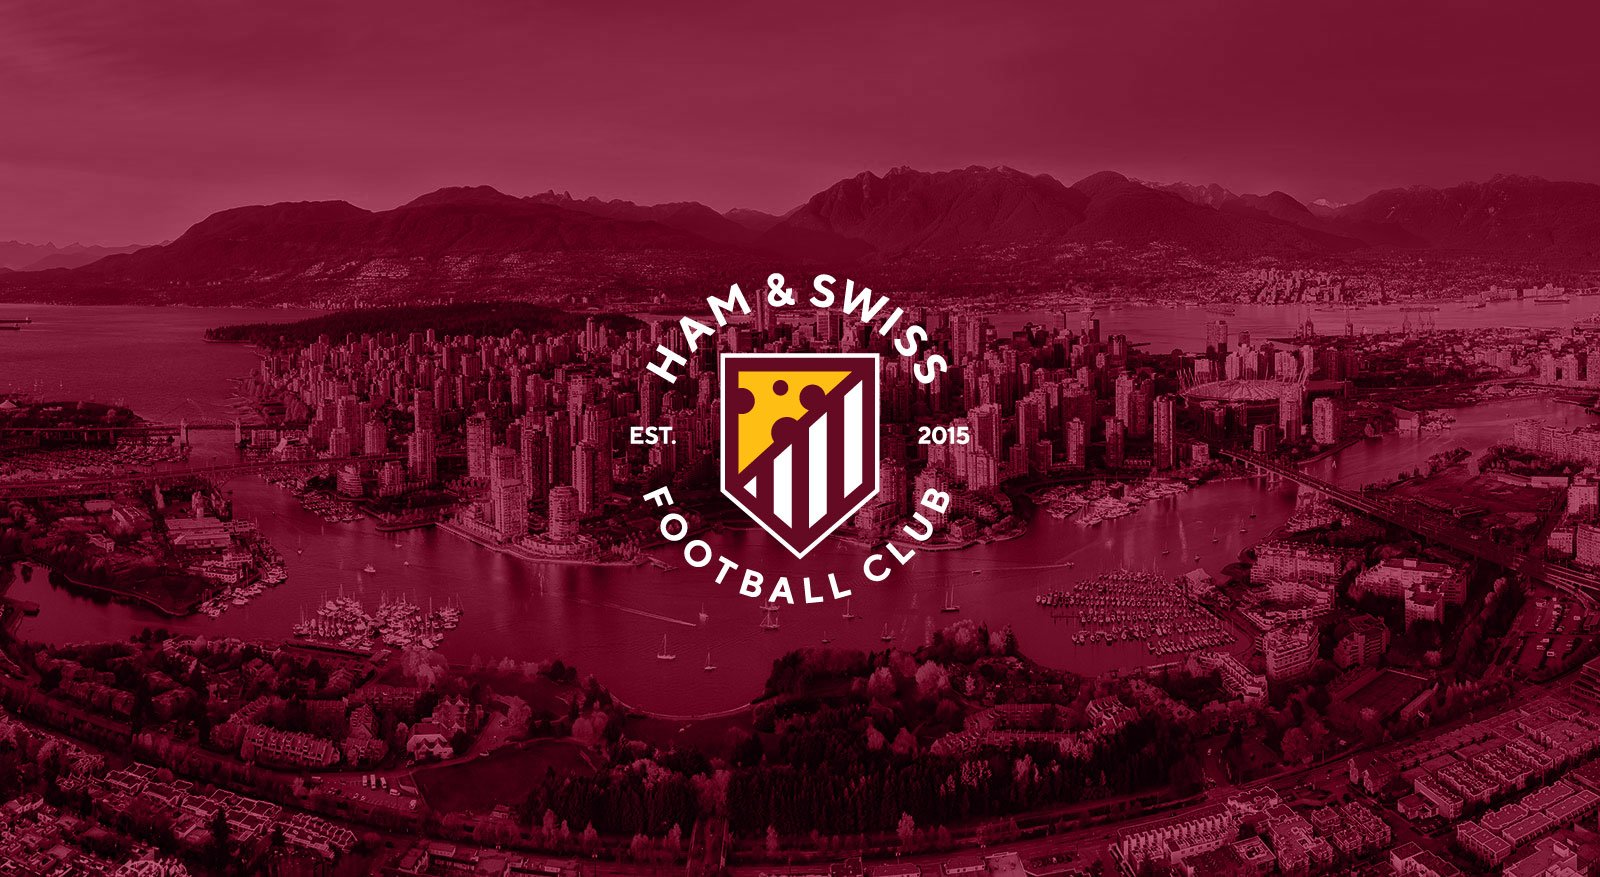 Ham & Swiss Football Club custom soccer logo design